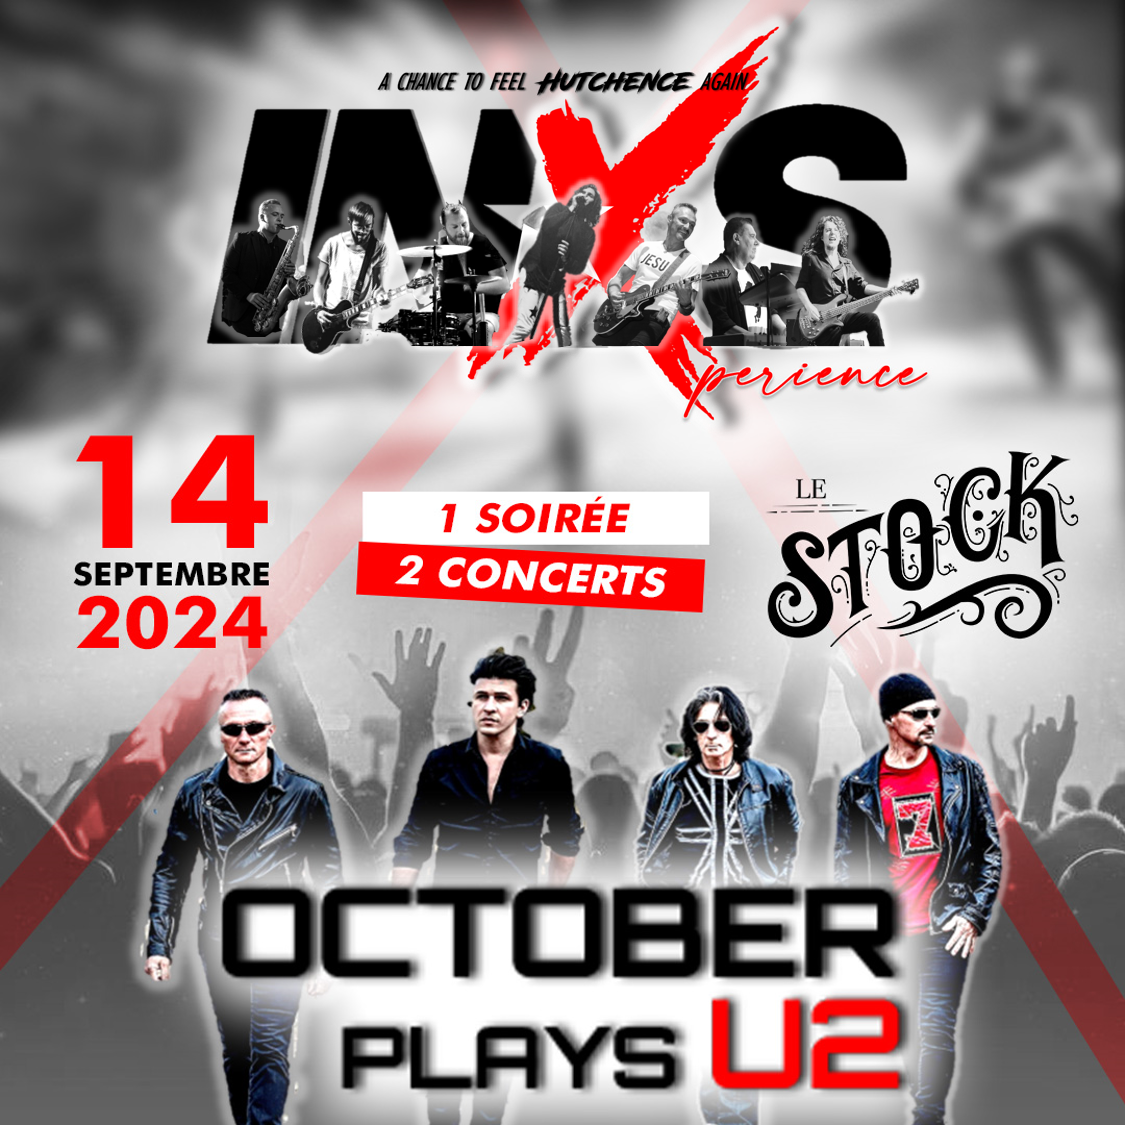 INXS XPERIENCE + OCTOBER plays U2